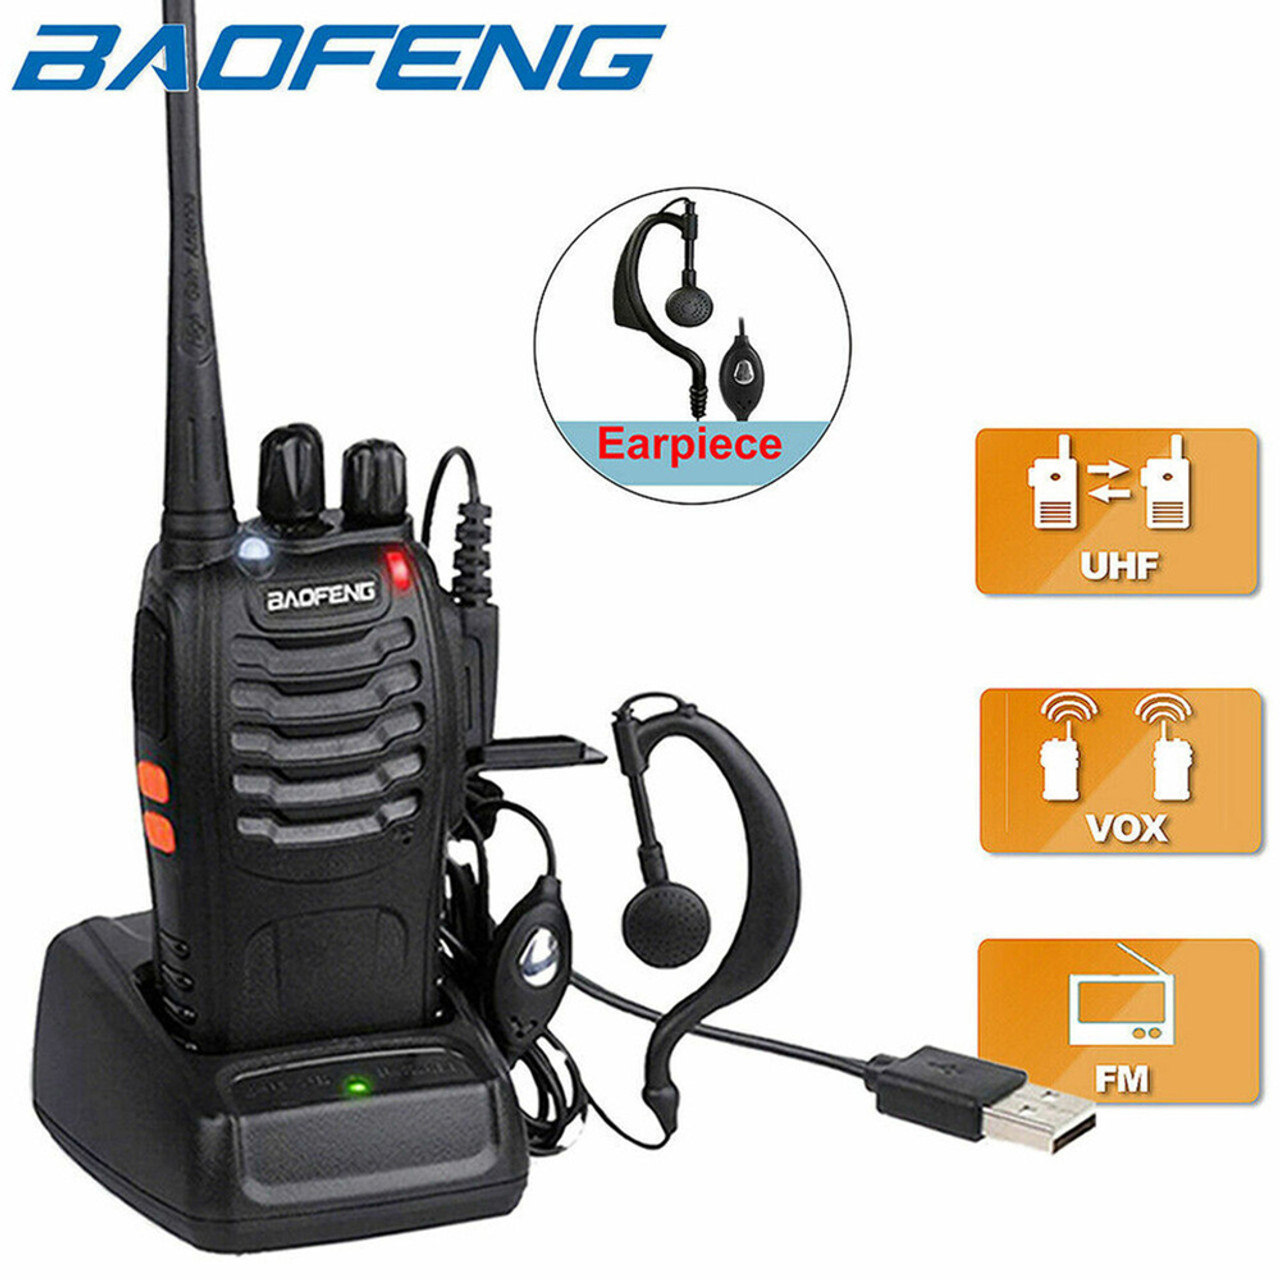 Baofeng Radio BF-888S UHF Walkie Talkie Long Range VOX Two Way Radio  Earpiece